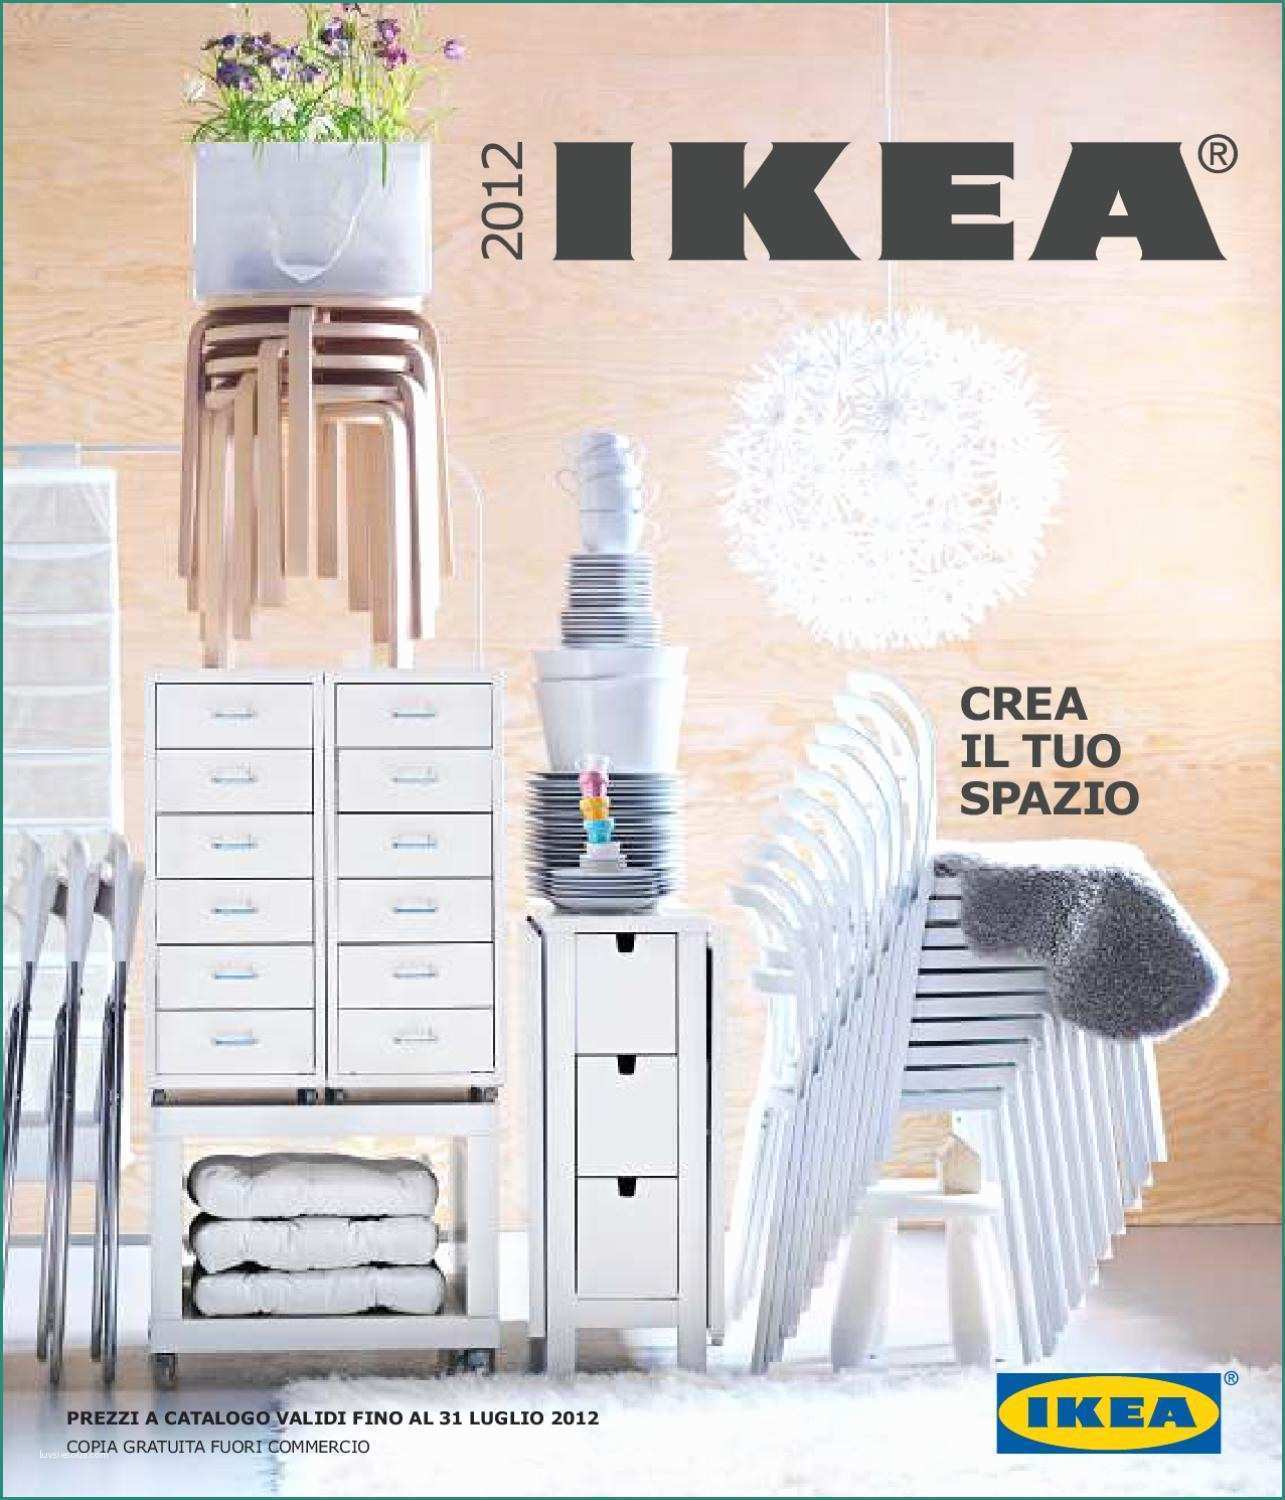 Pareti Mobili Divisorie Ikea E Ikea Catalogo 2012 by Mercializzando toscana issuu